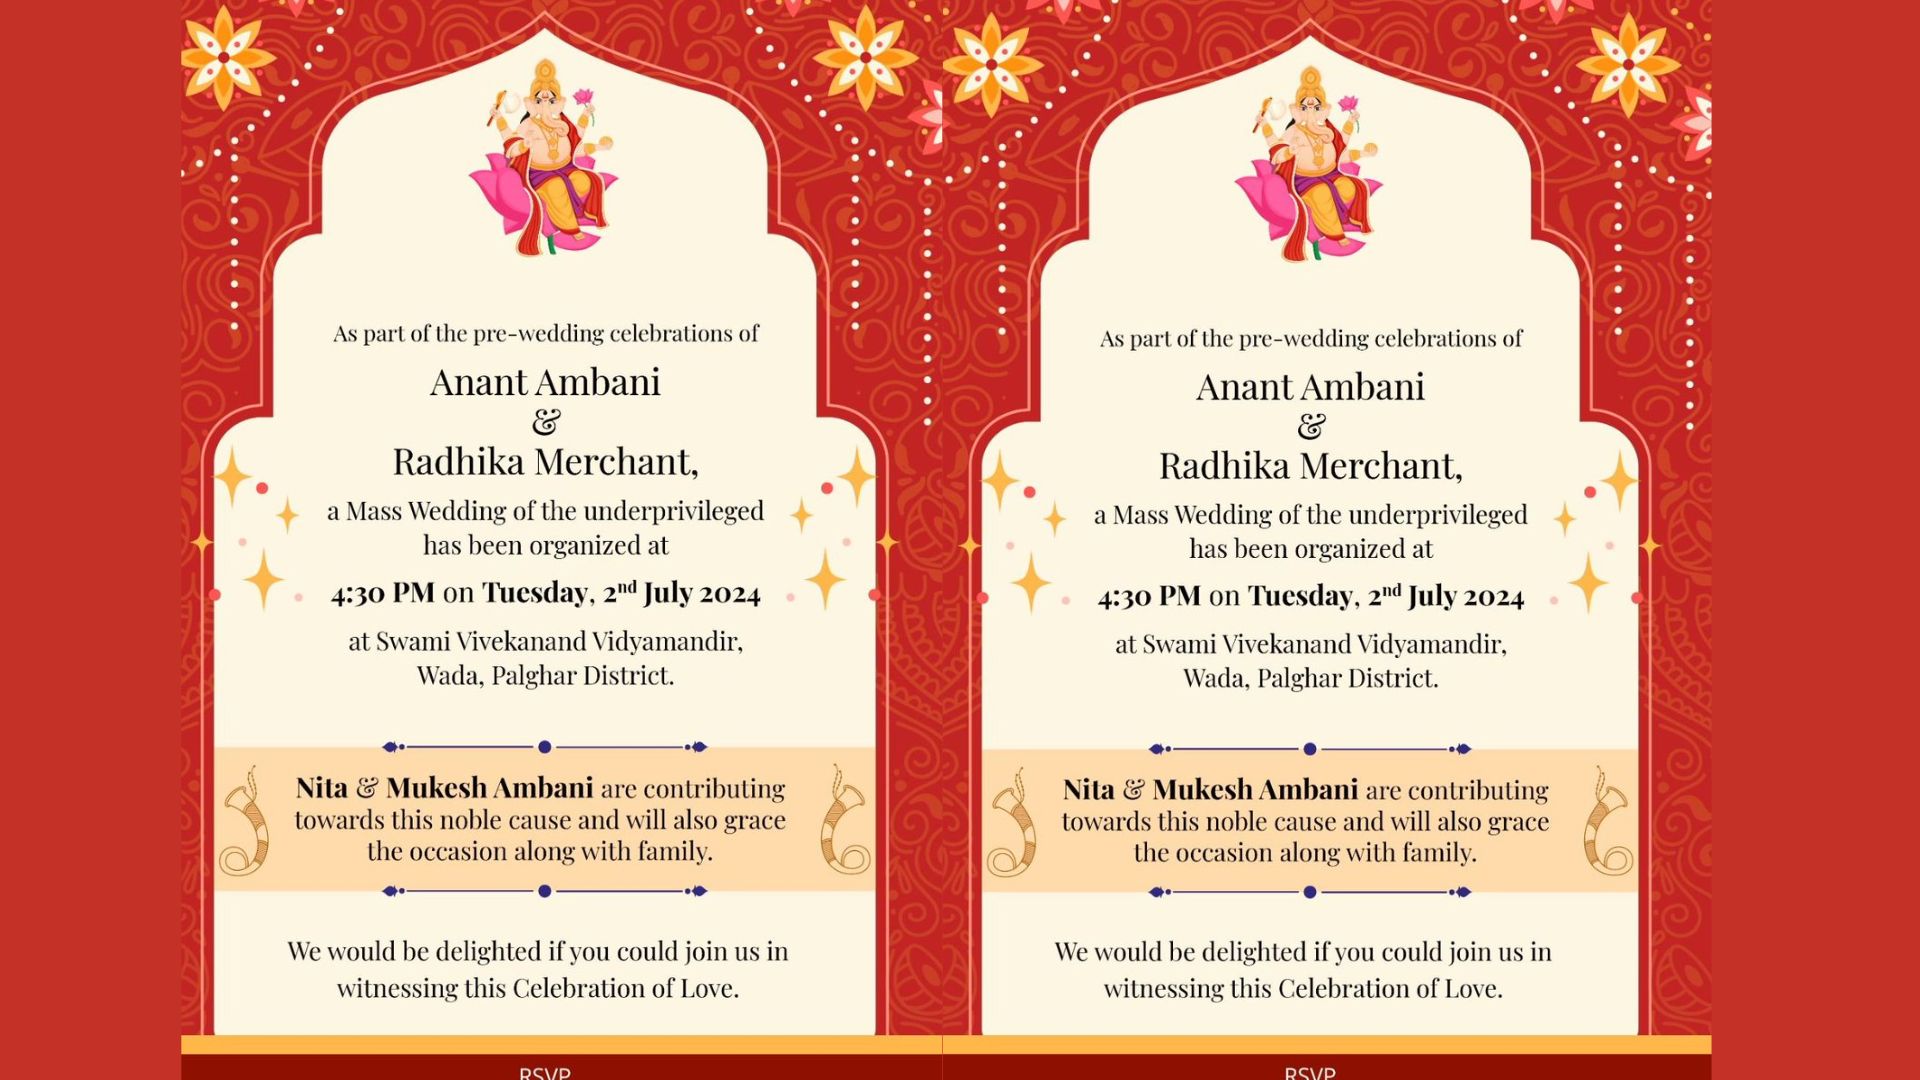 Anant Ambani and Radhika Merchant Host Mass Wedding for Underprivileged on July 2